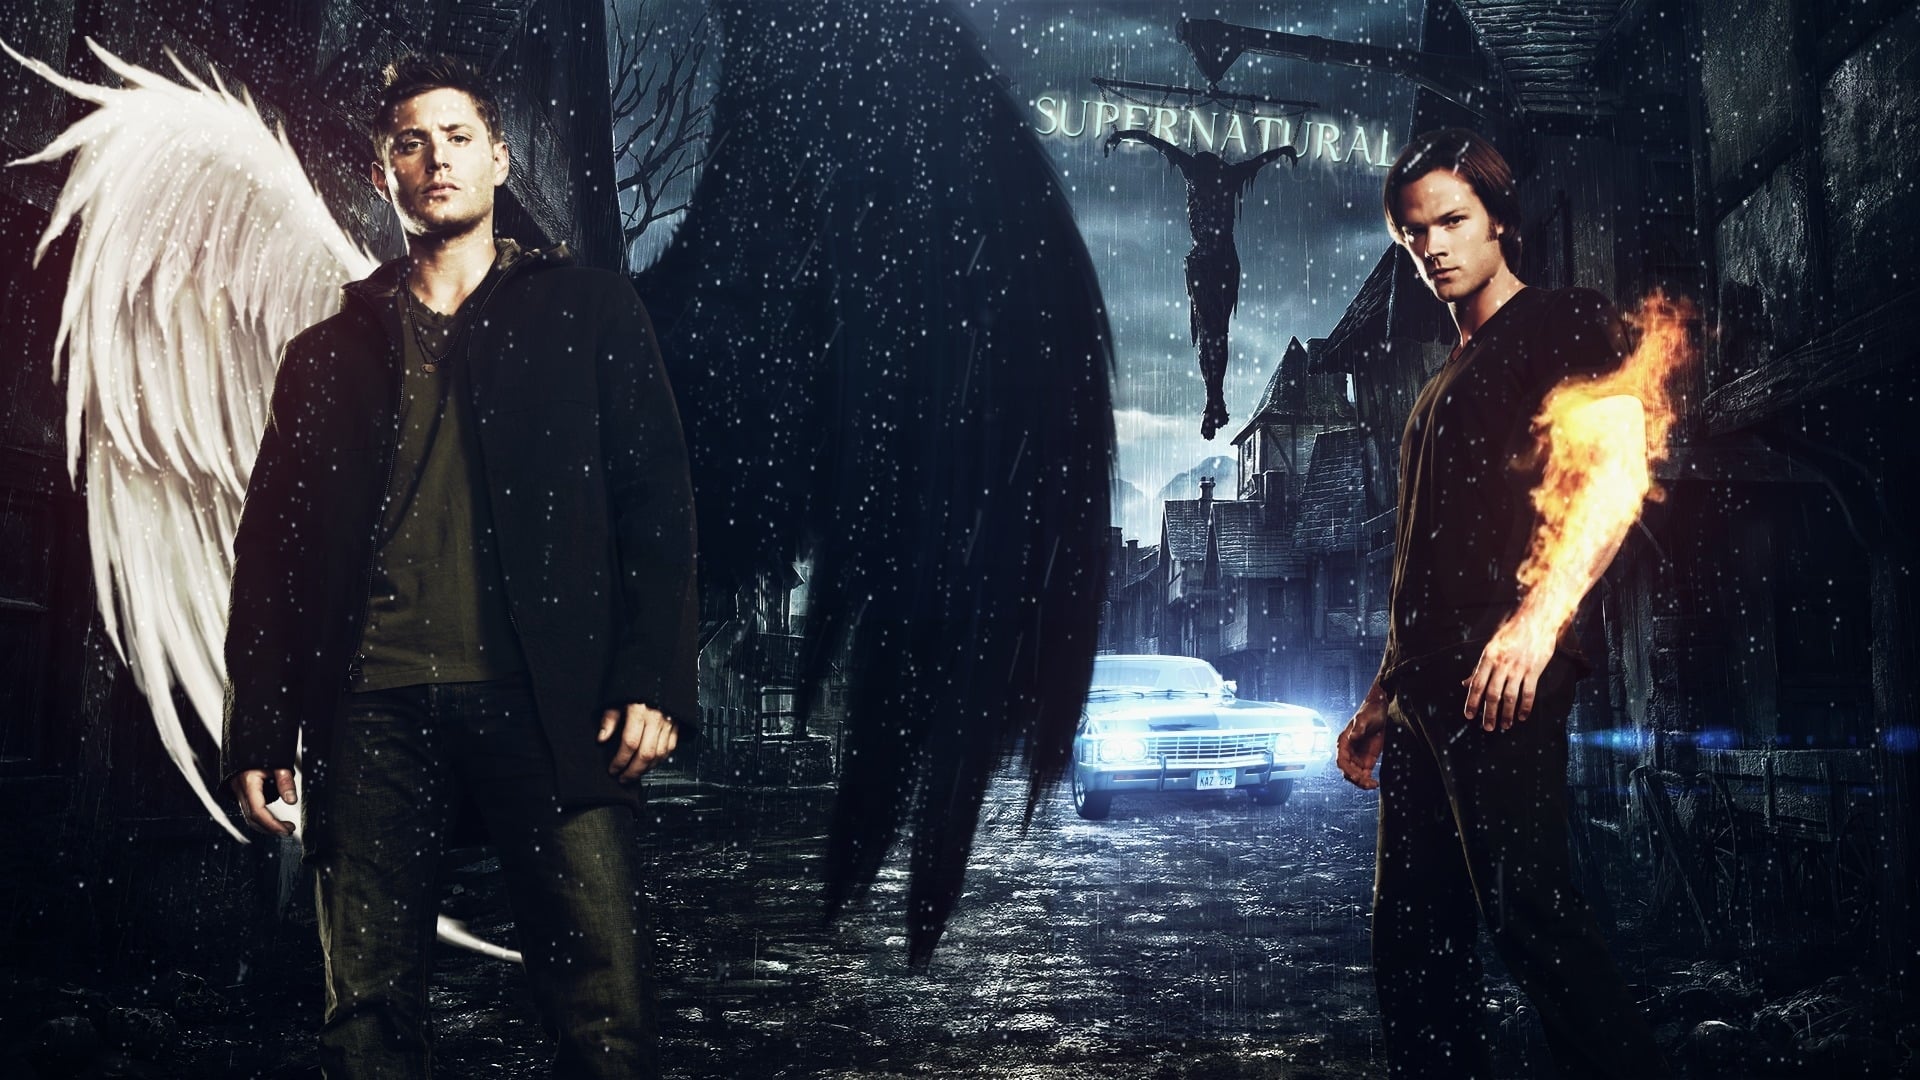 Supernatural - Season 10 Episode 20